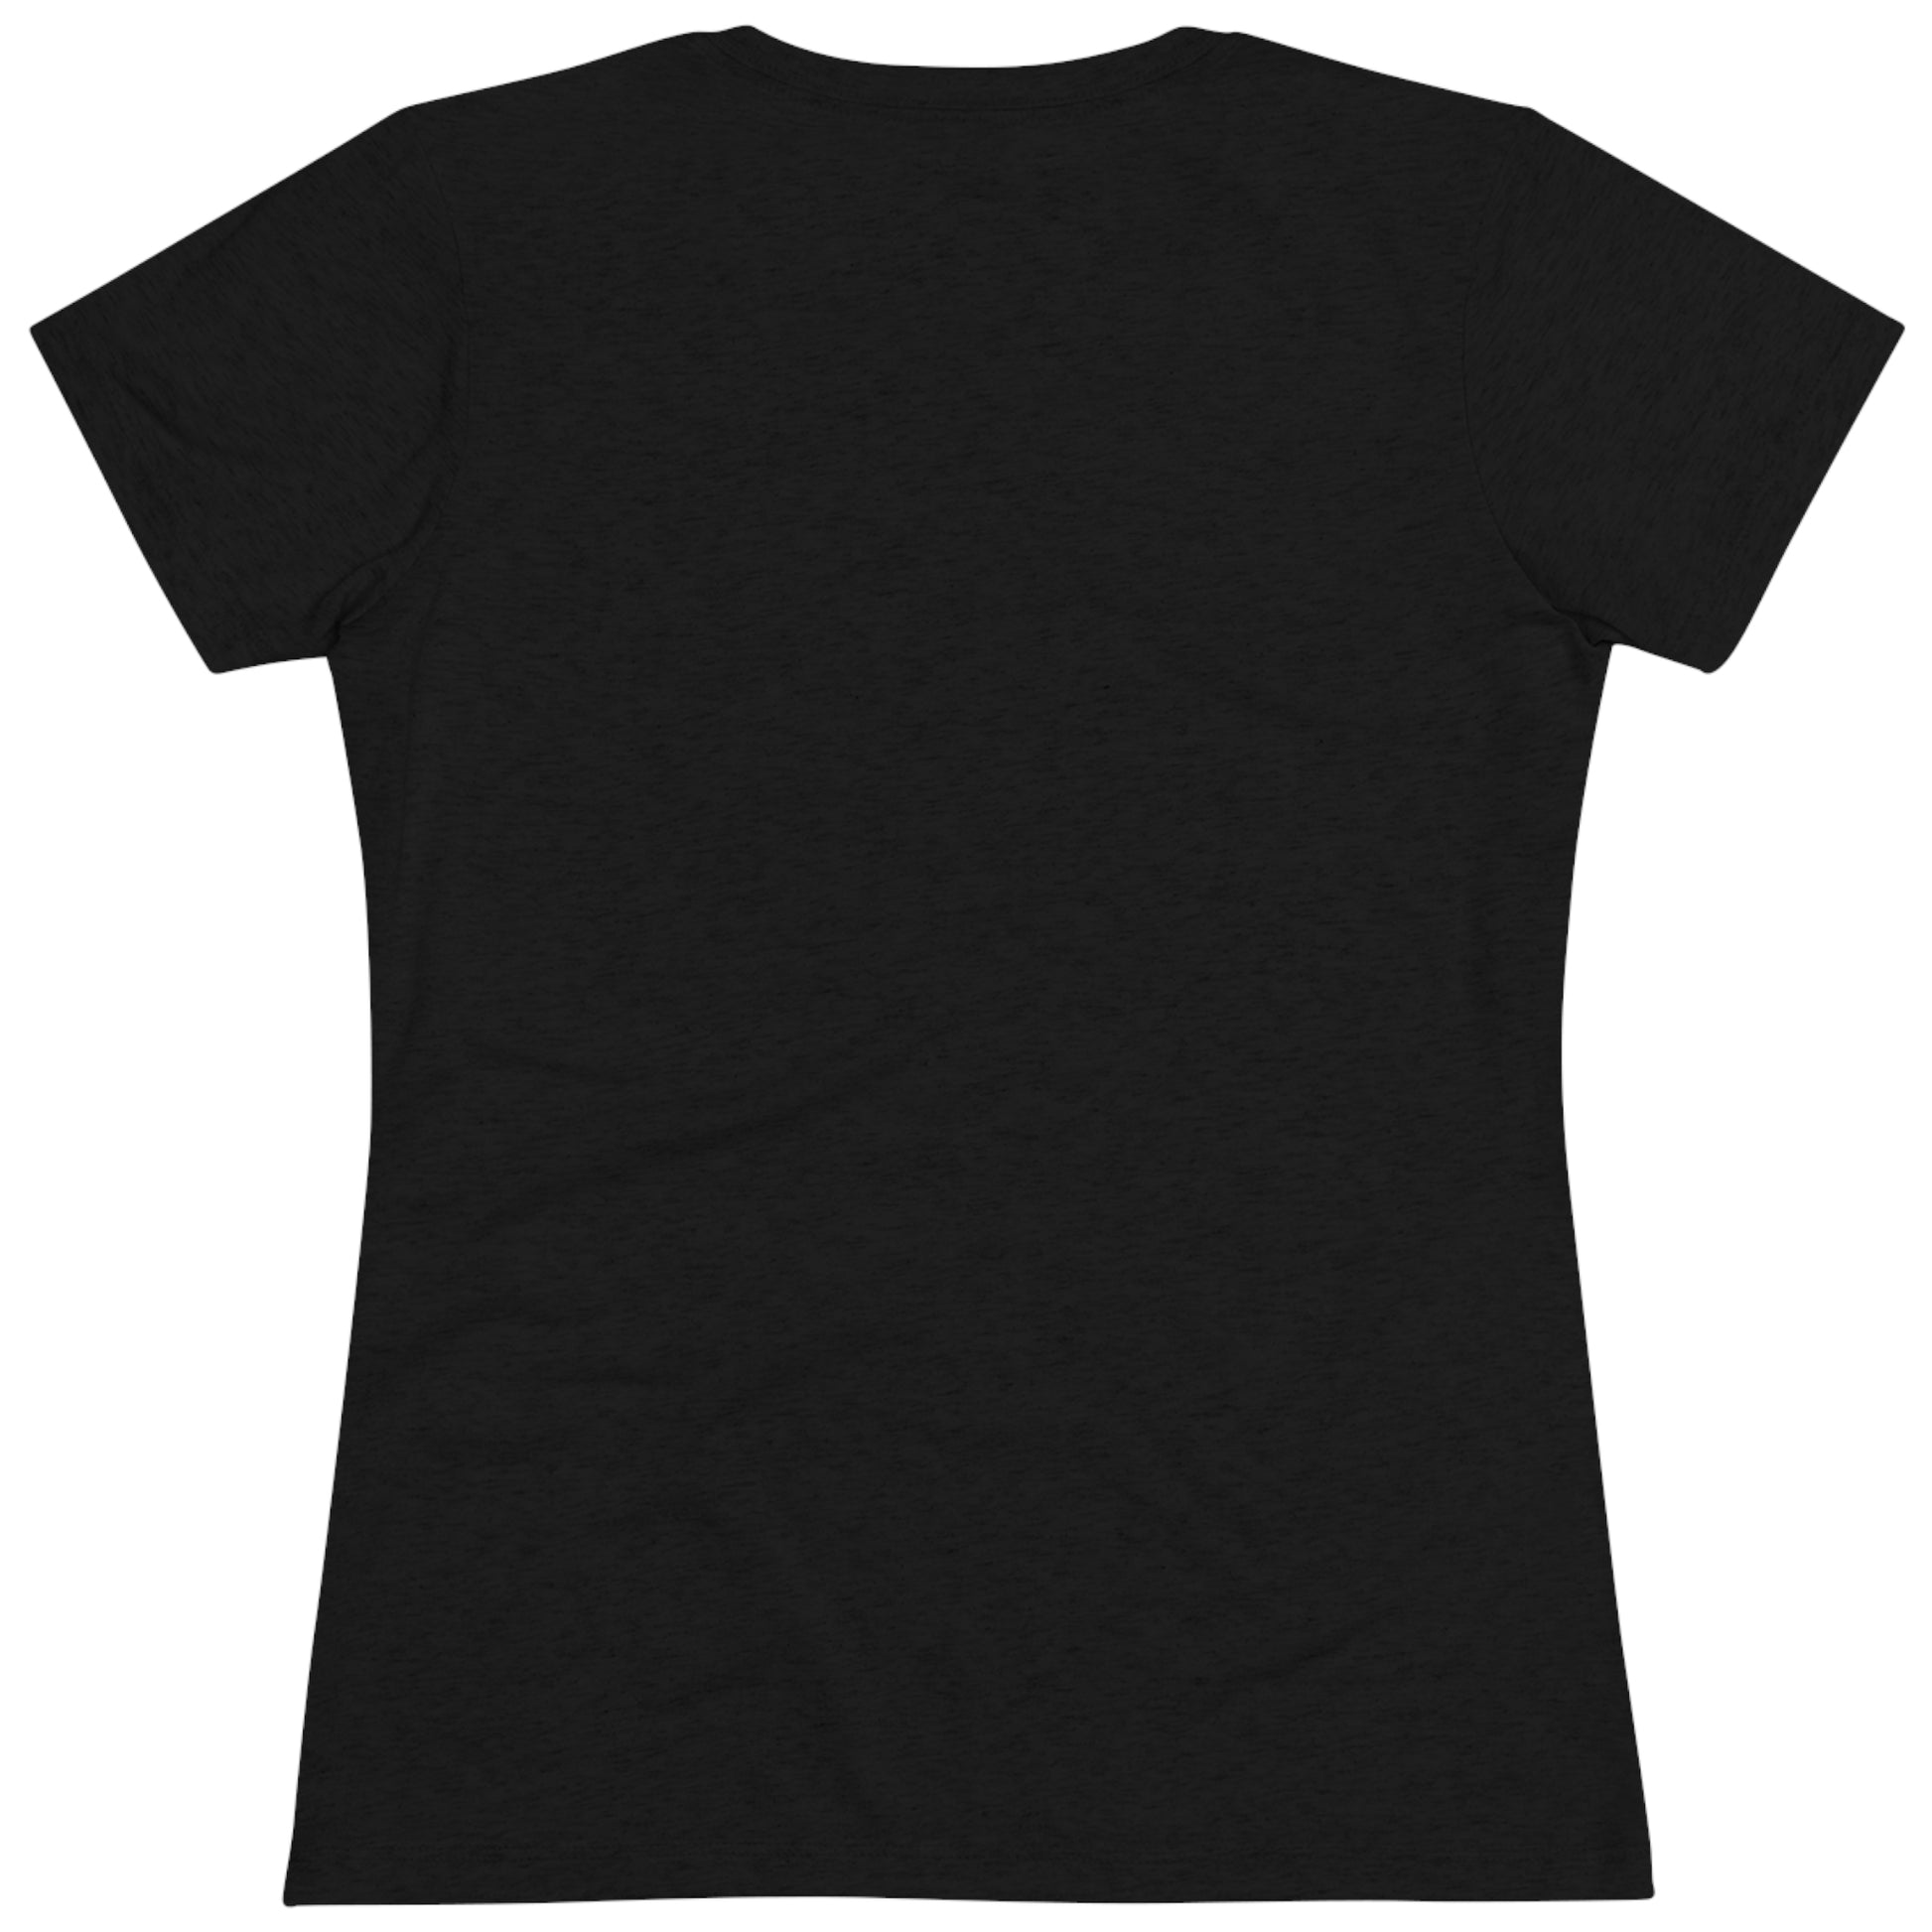 Womens "St. Georgeous" Shirt - Utah.com